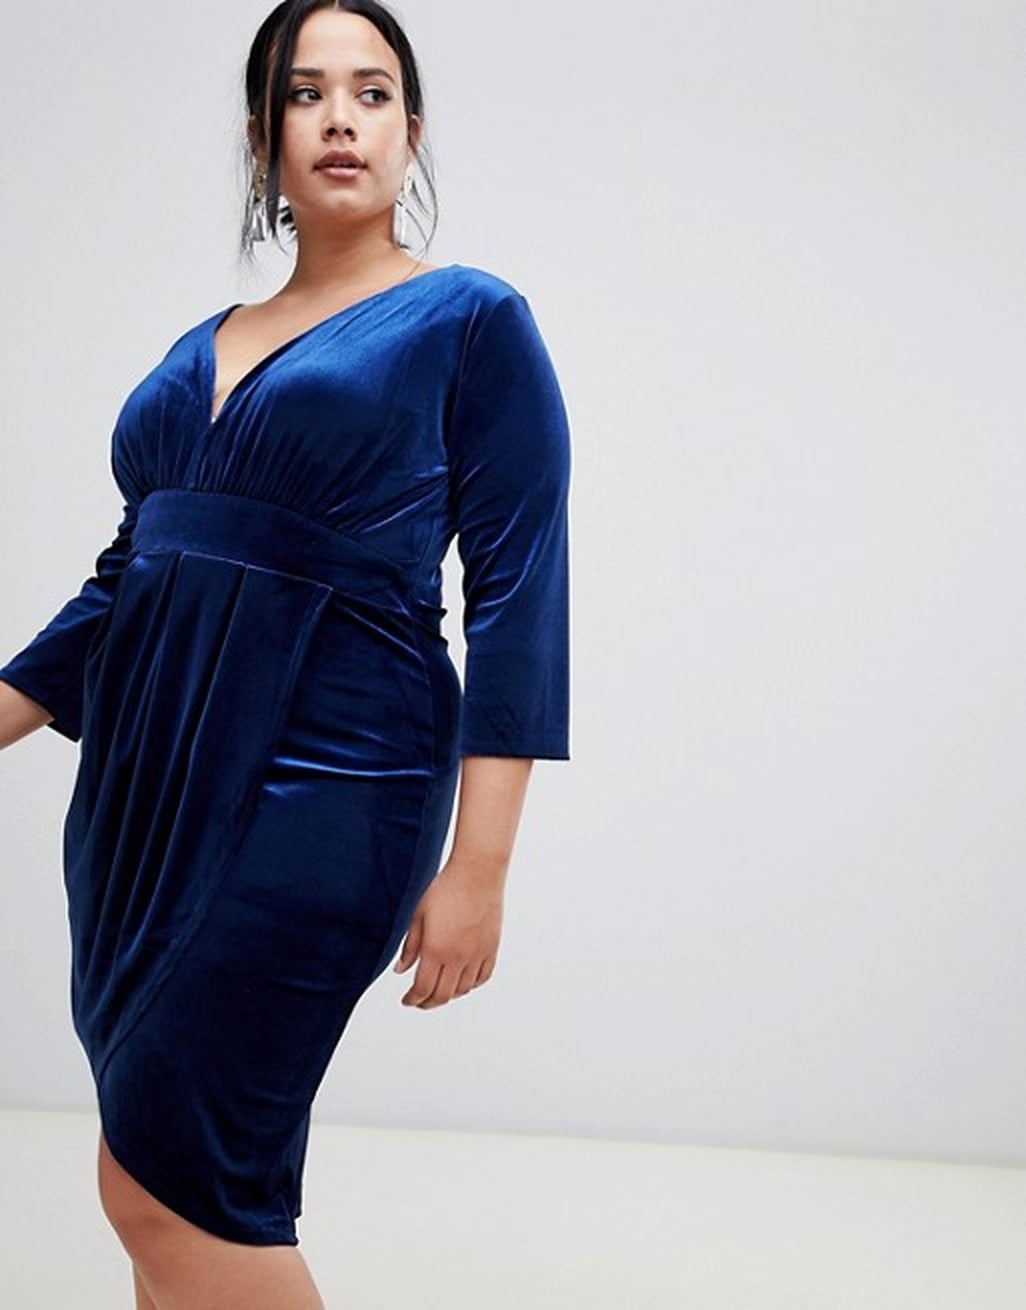 Kylie Jenner Blue Velvet Balenciaga Dress | POPSUGAR Fashion